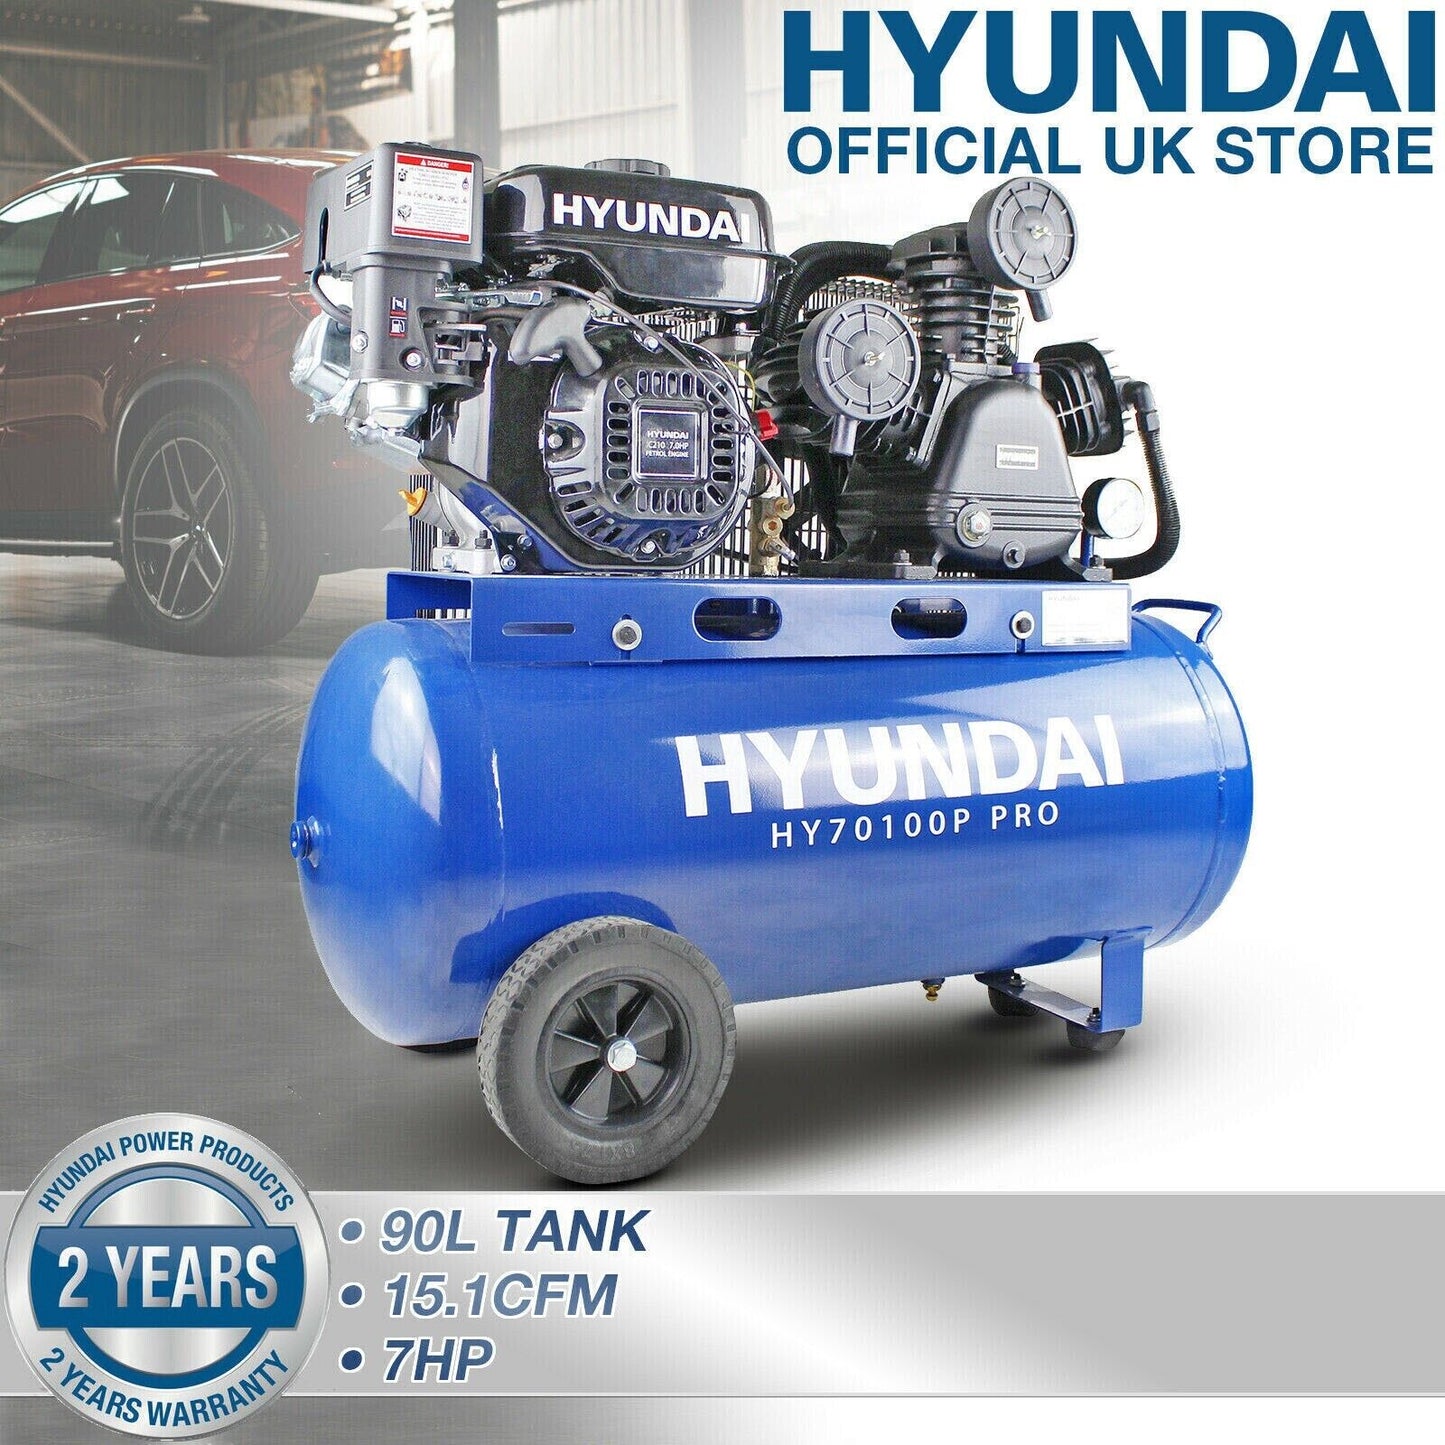 Hyundai Petrol Air Compressor, 90 ltr Portable 10.75FM 145psi 7hp HY70100P